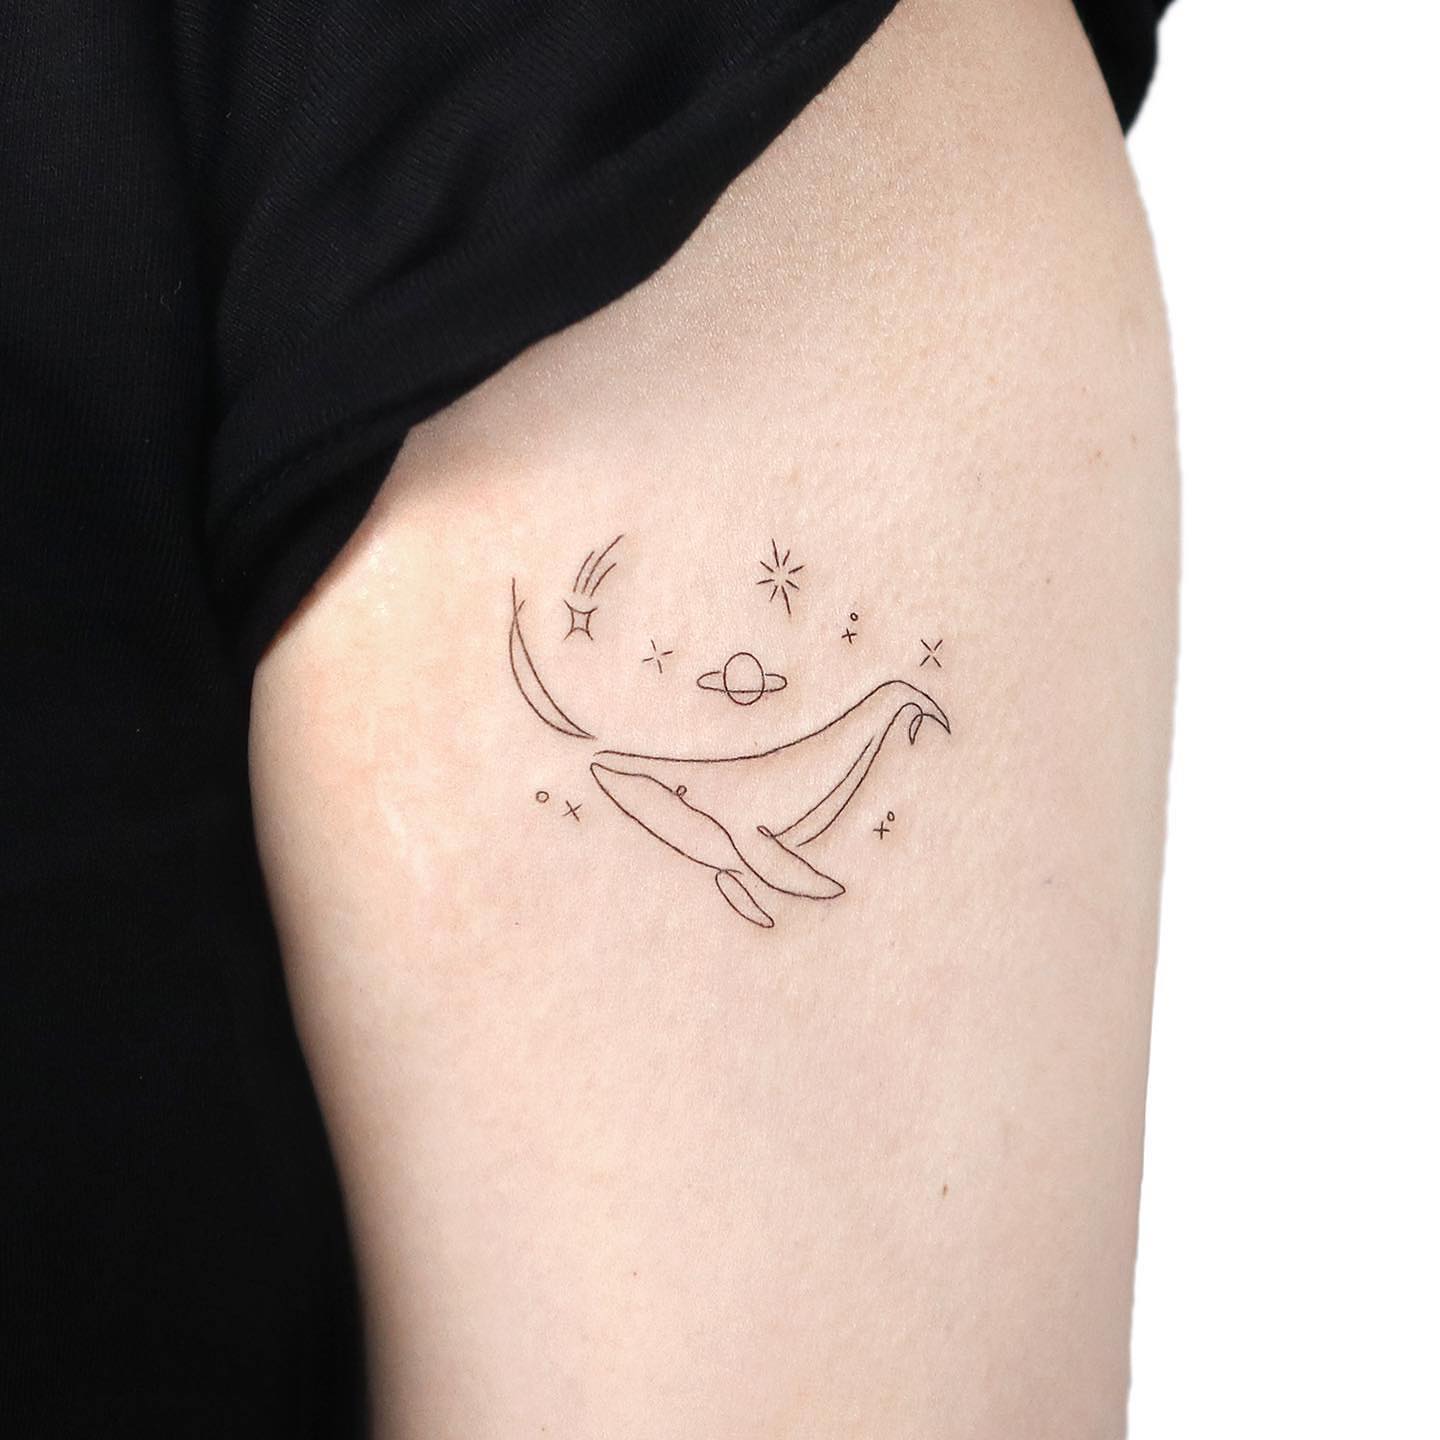 Dolphin tattoo on upper arm by gigi tattooer